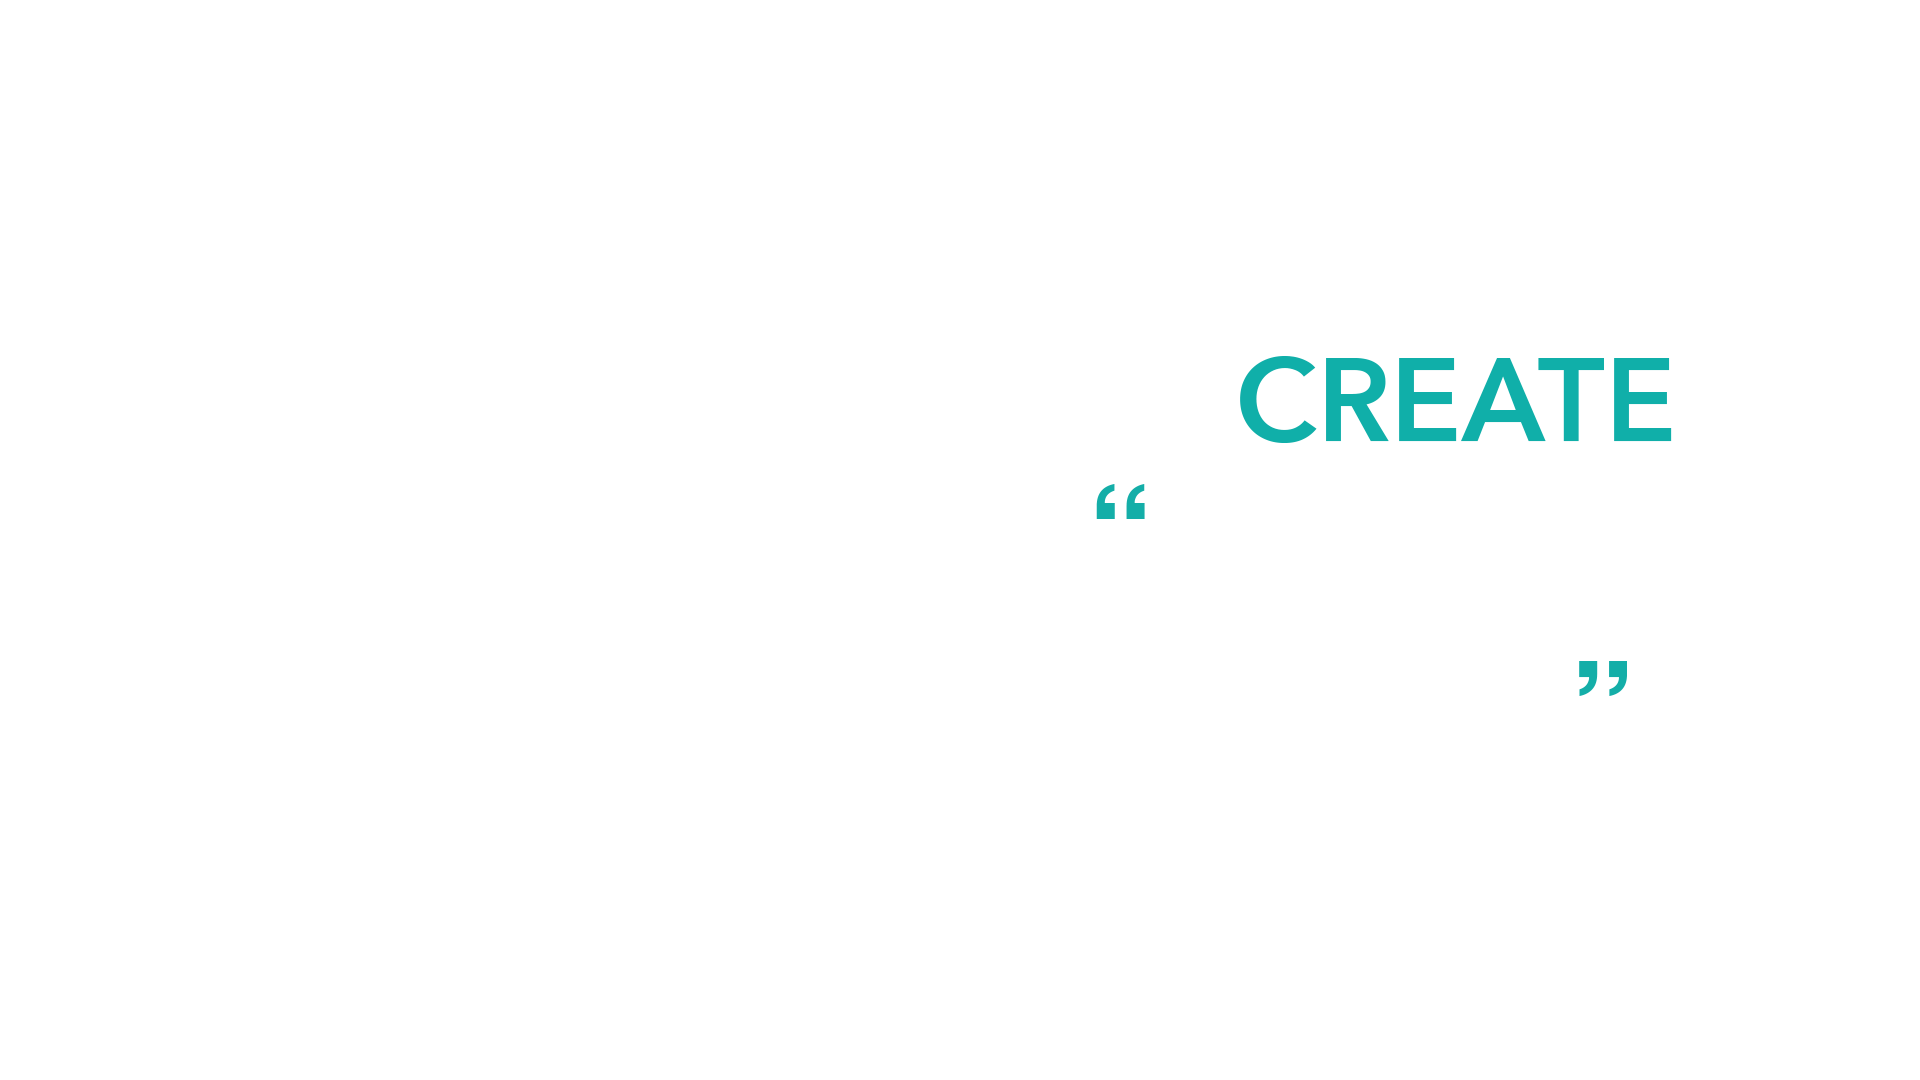 CREATE-1_-1